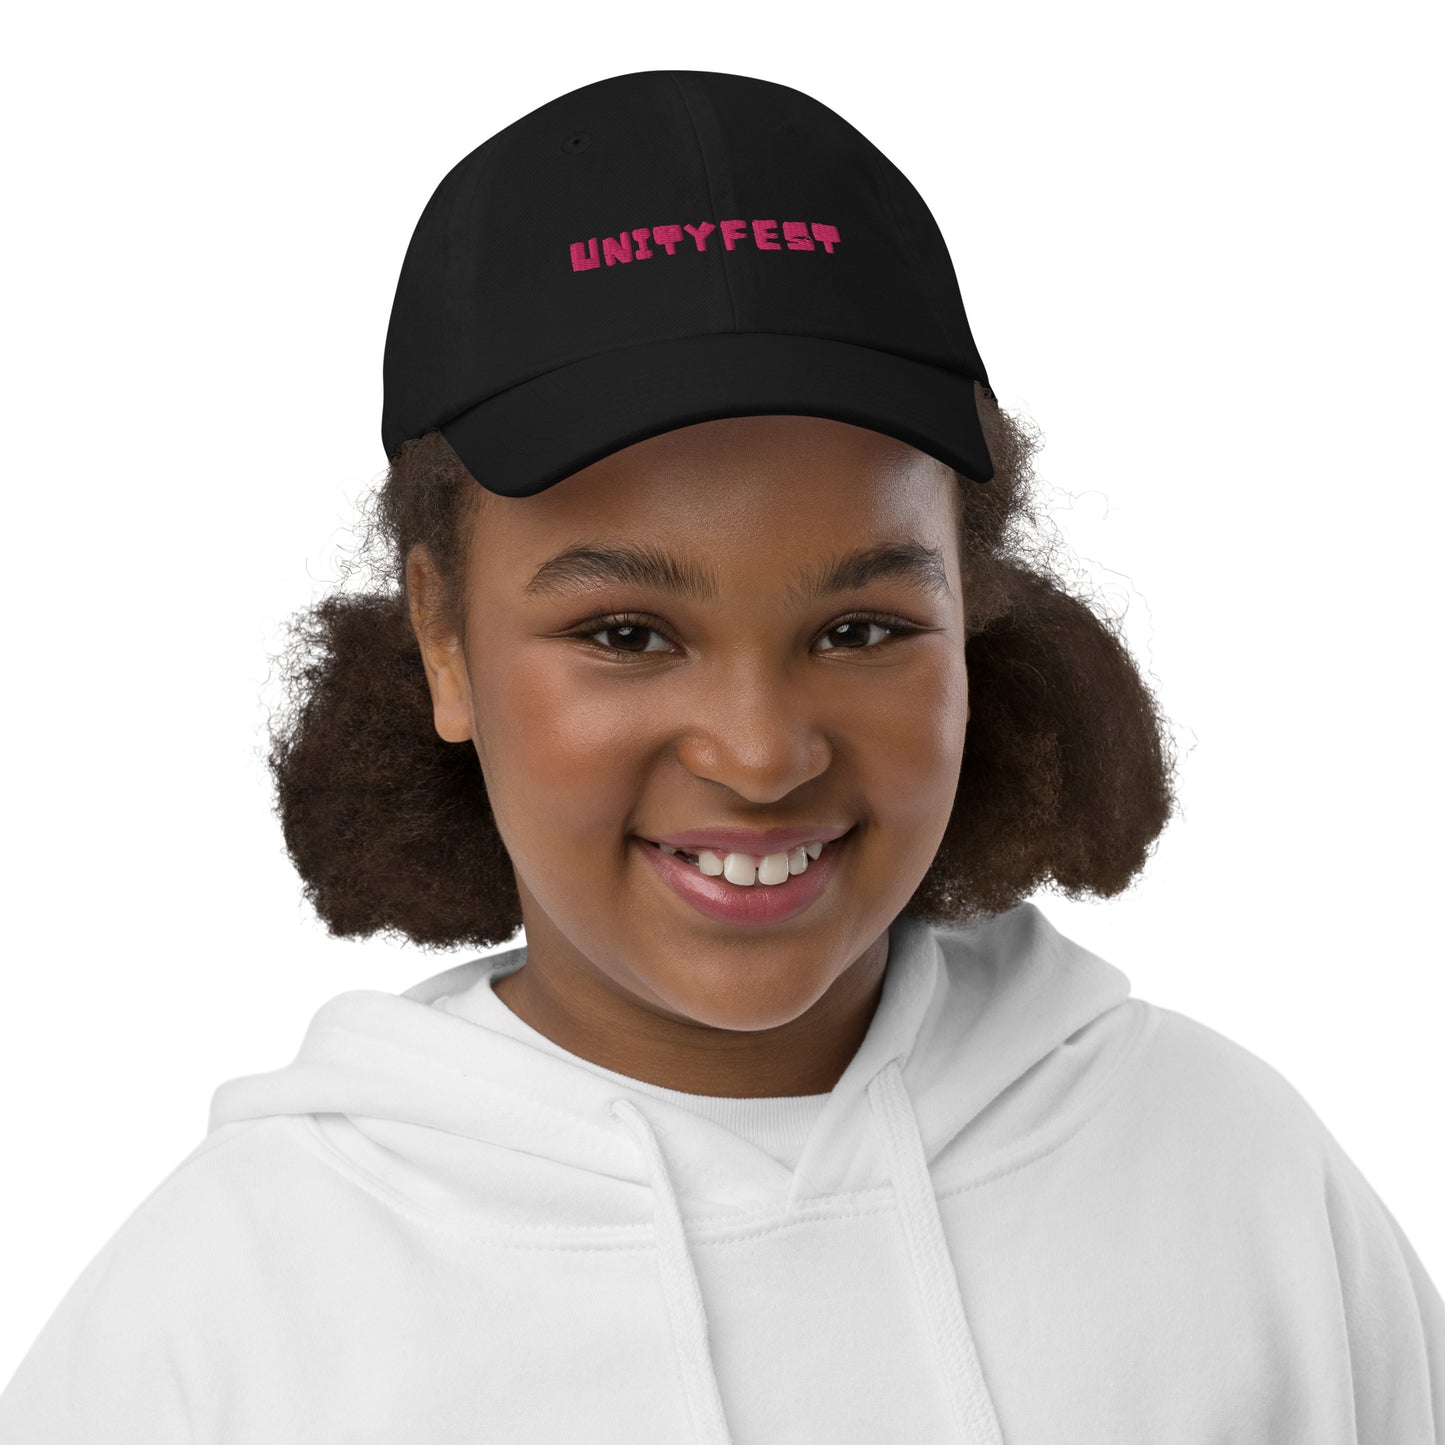 Unityfest Youth baseball cap